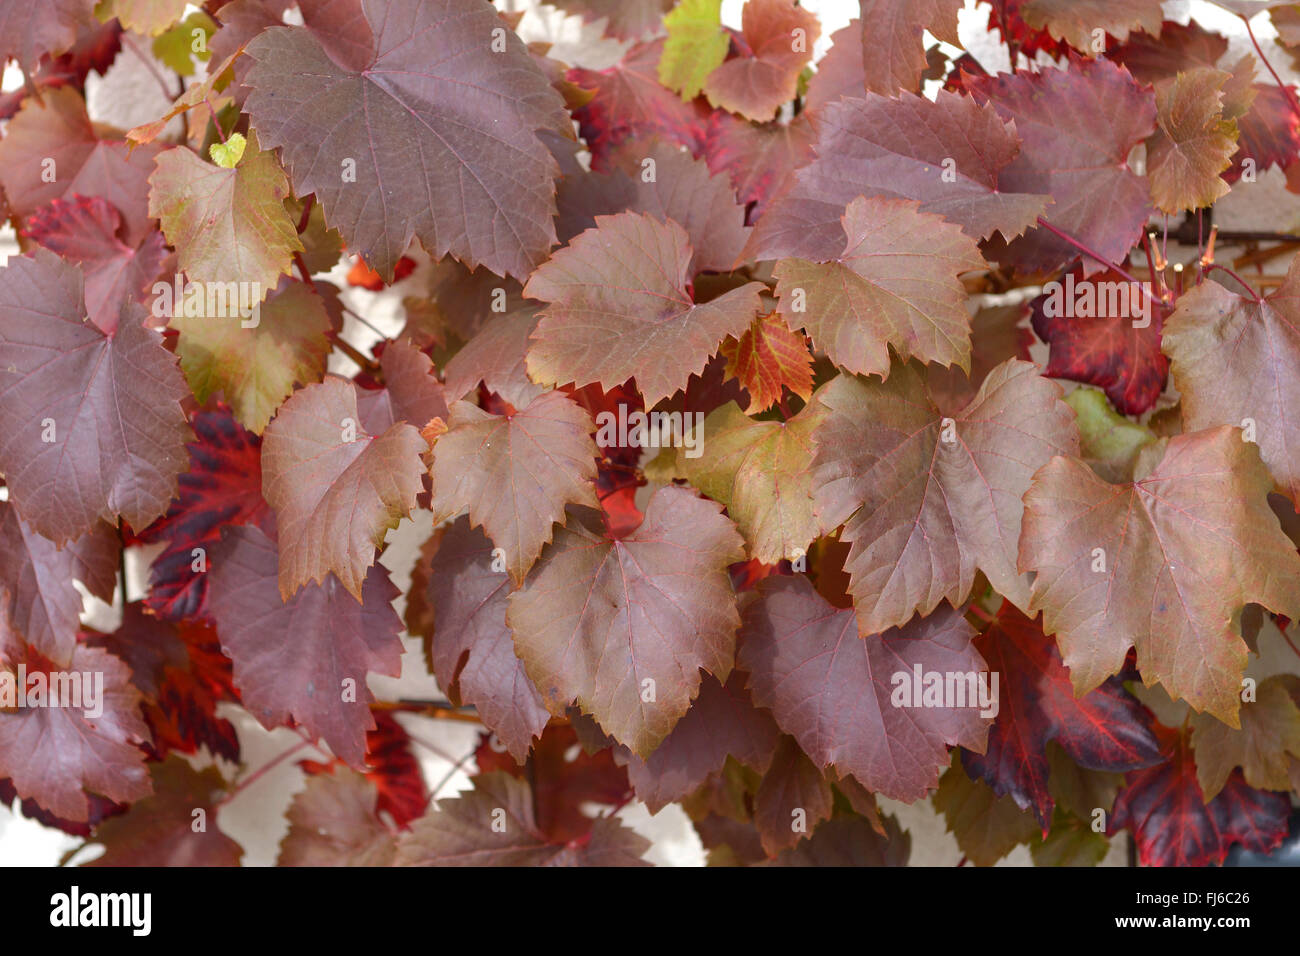 grape-vine, vine (Vitis vinifera 'Spetchley Red', Vitis vinifera Spetchley Red), leaves of cultivar Spetchley Red, Germany, Saxony Stock Photo